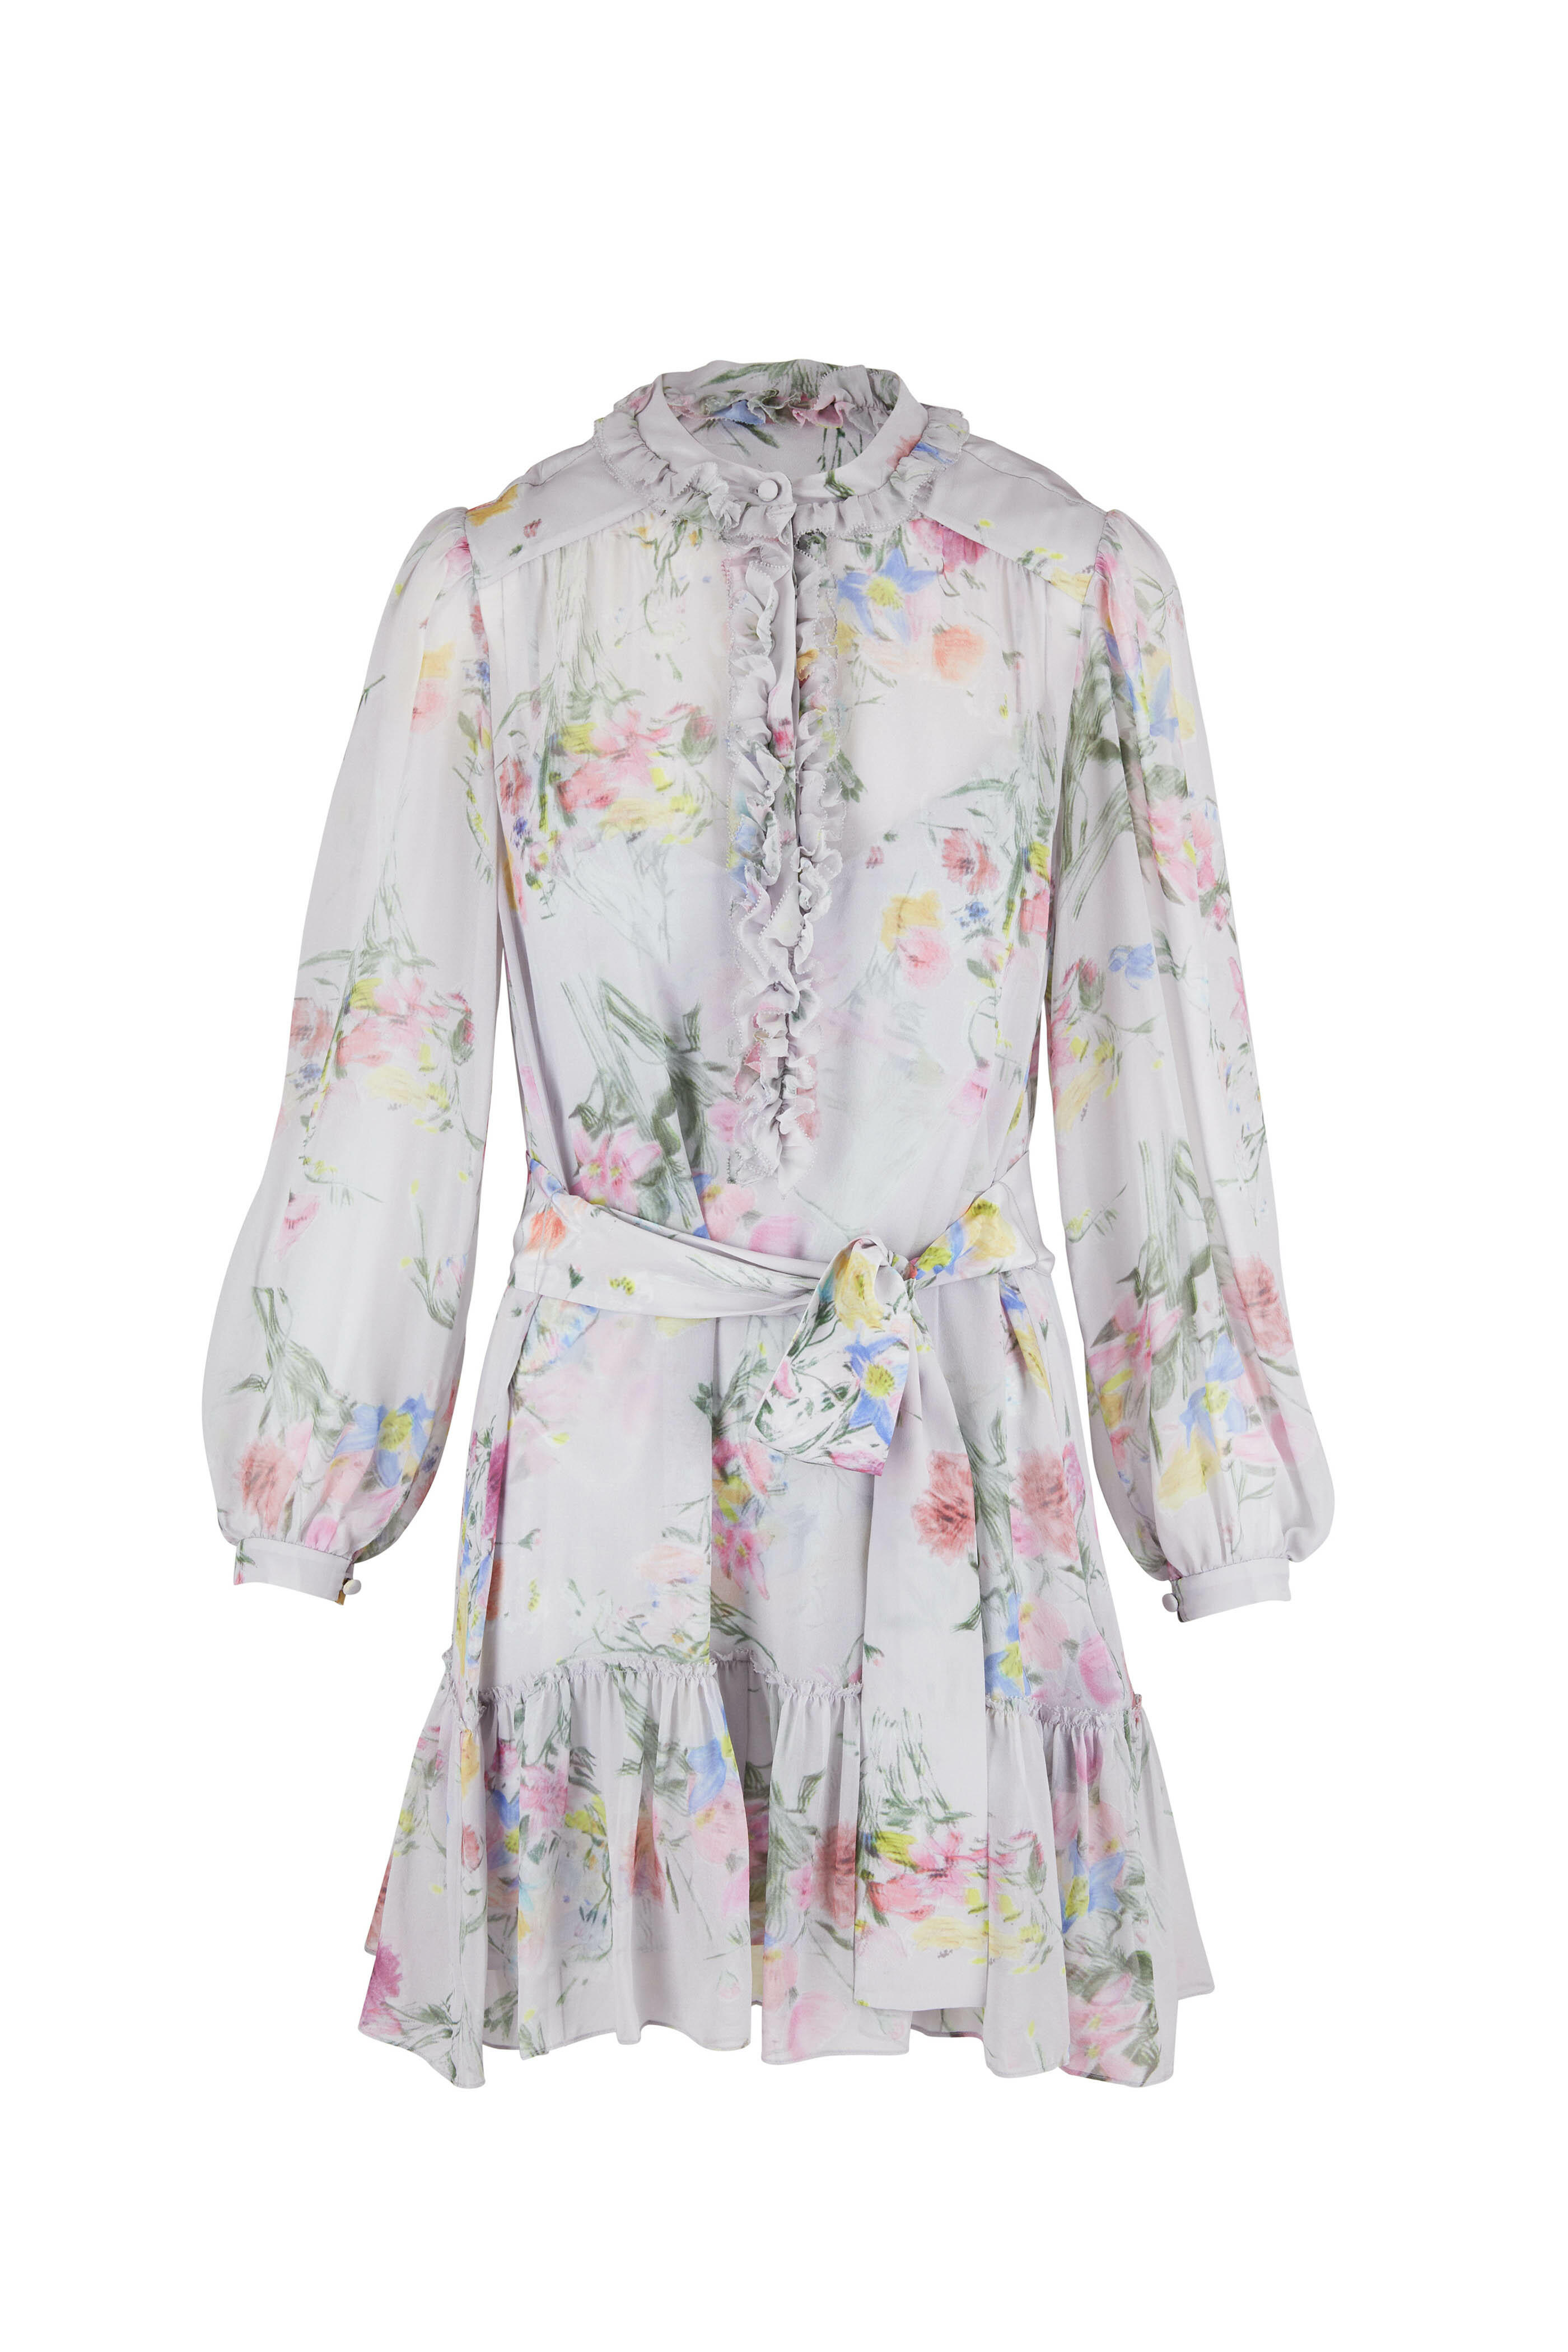 Dorothee Schumacher - Article Floral Romance I Multicolor Silk Dress